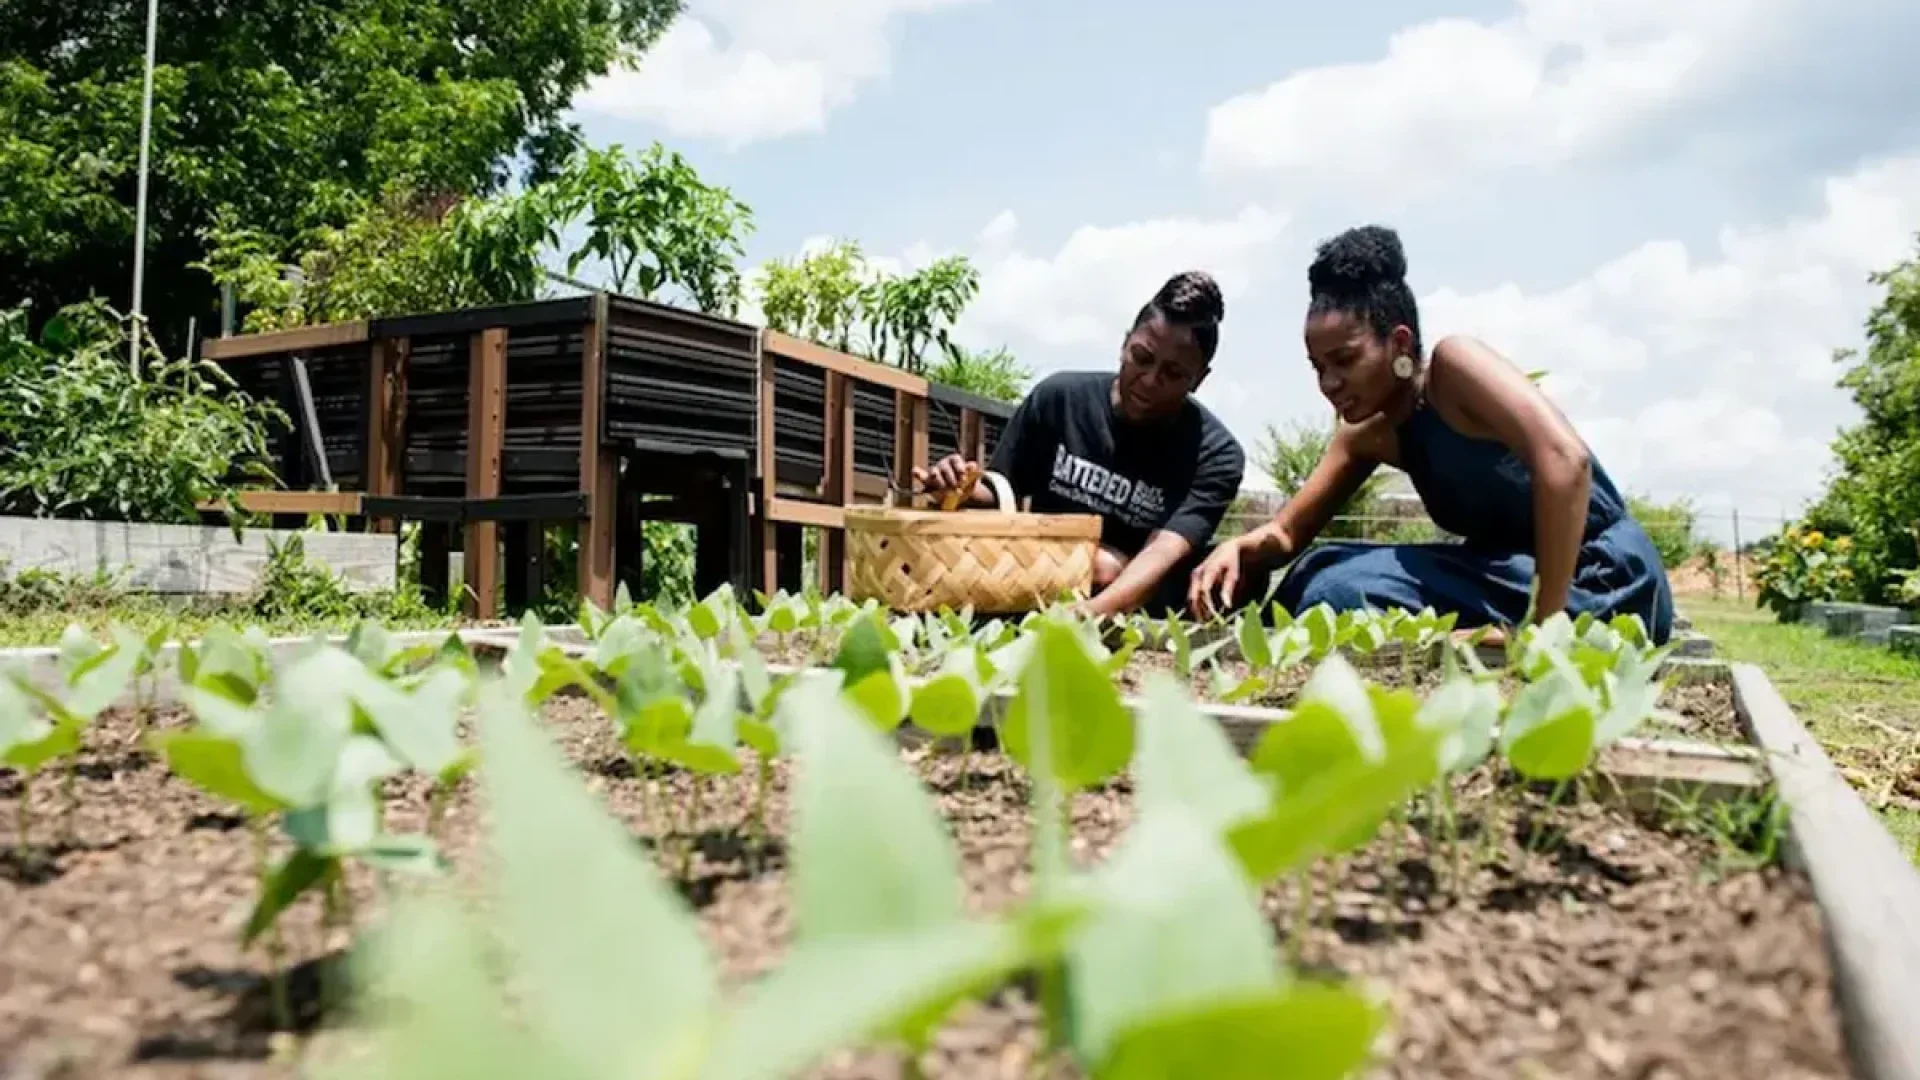 This Black Woman Is Working To Help Black People Keep Their Land